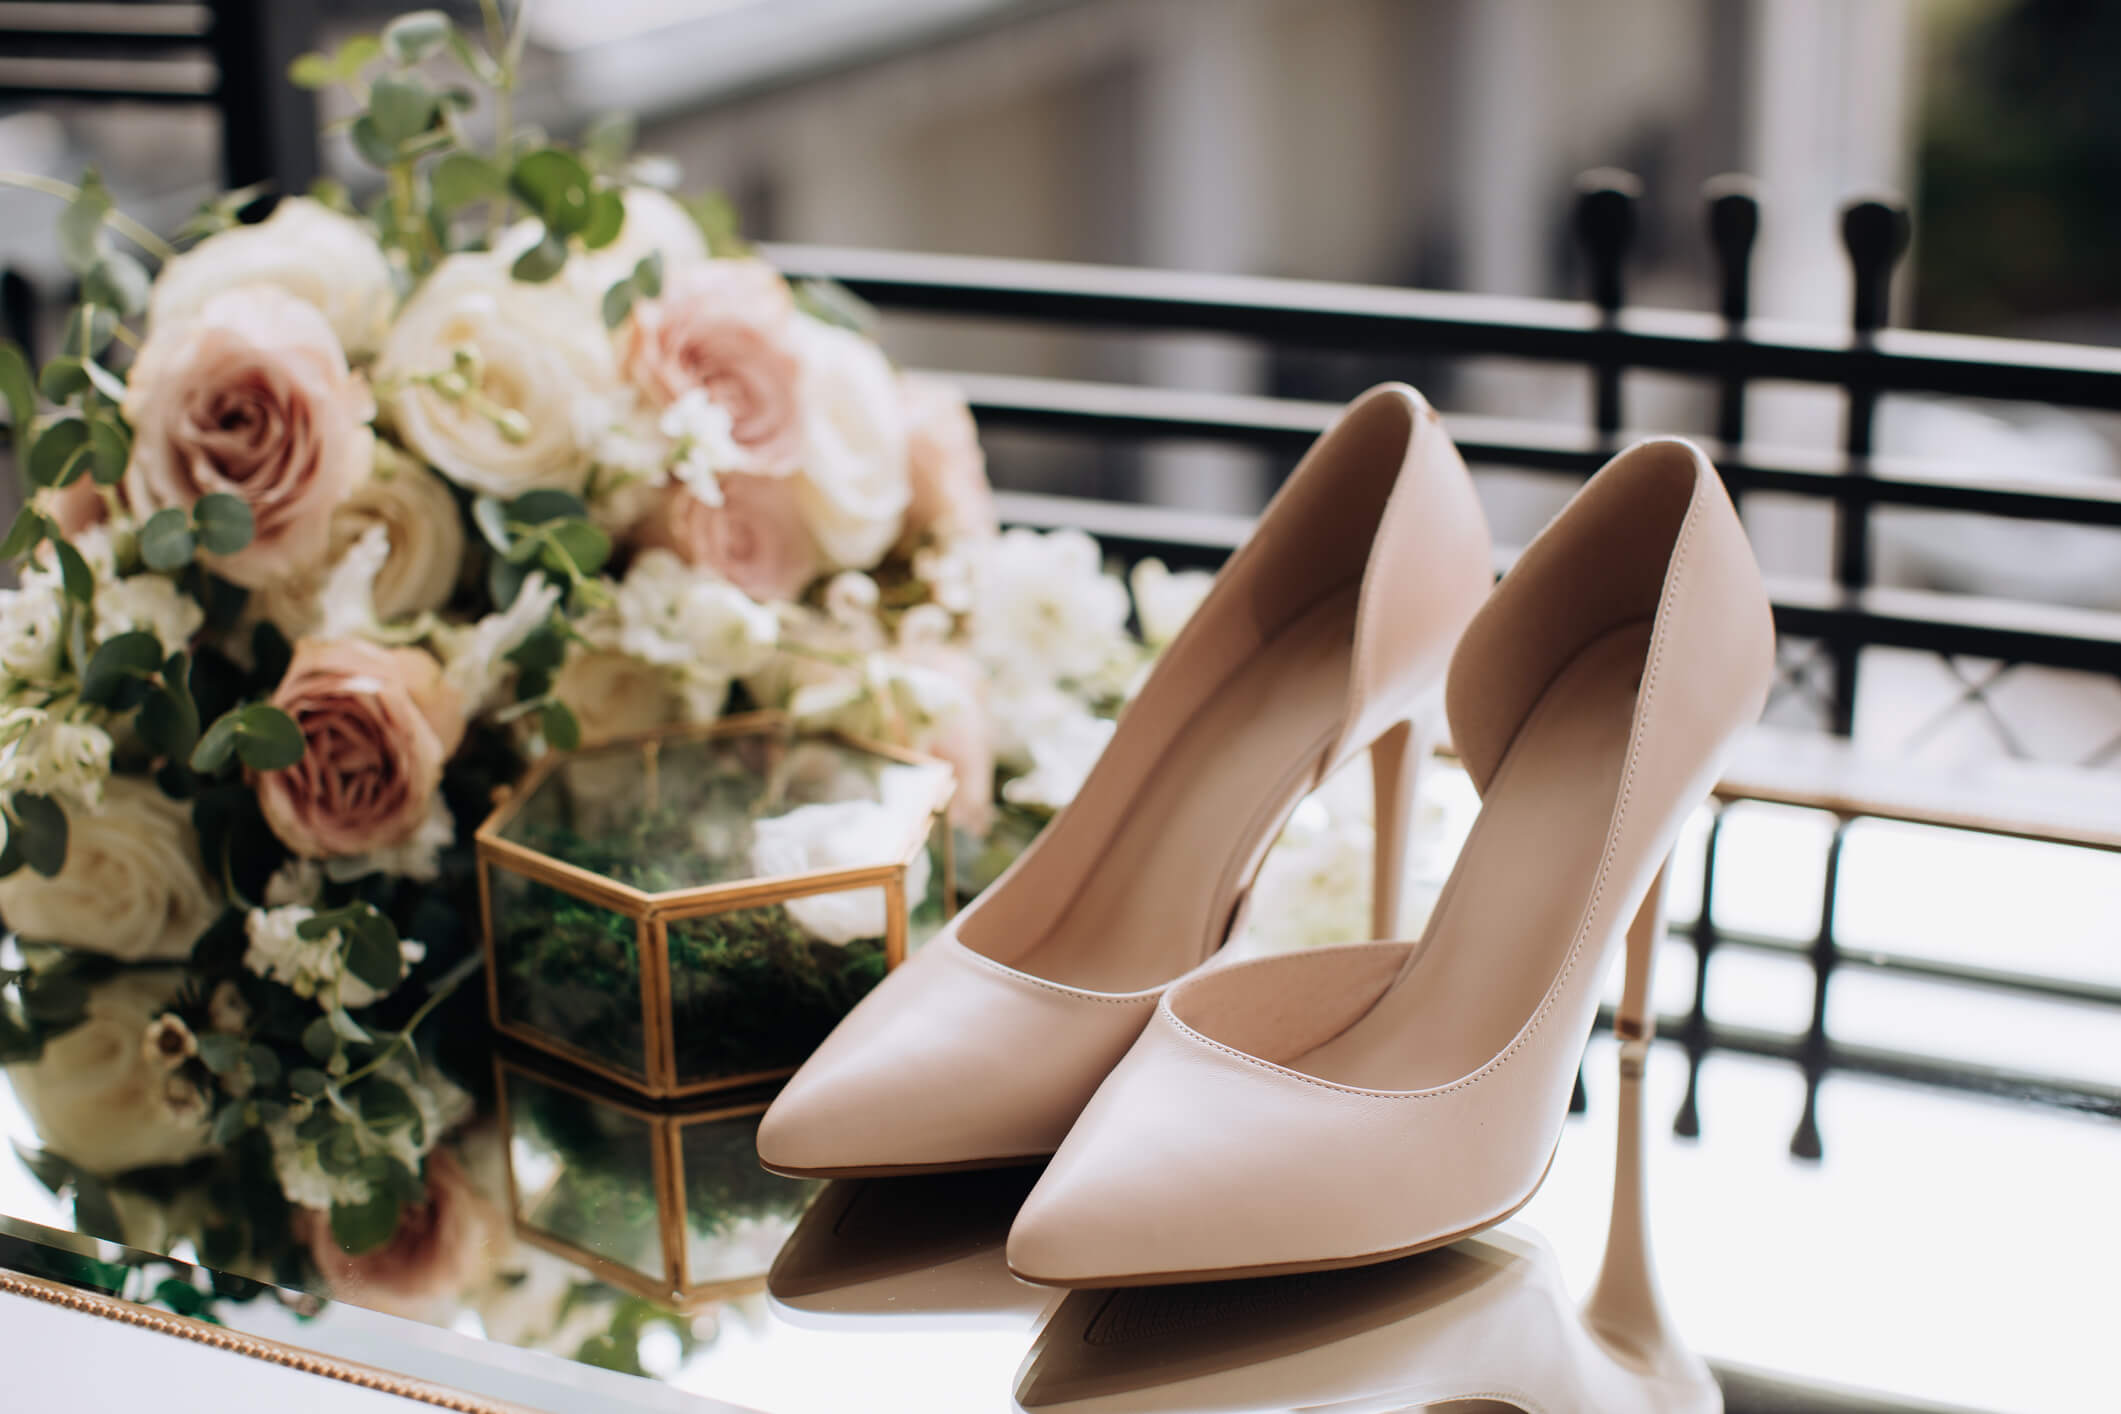 Sapato de noiva: como escolher o modelo ideal